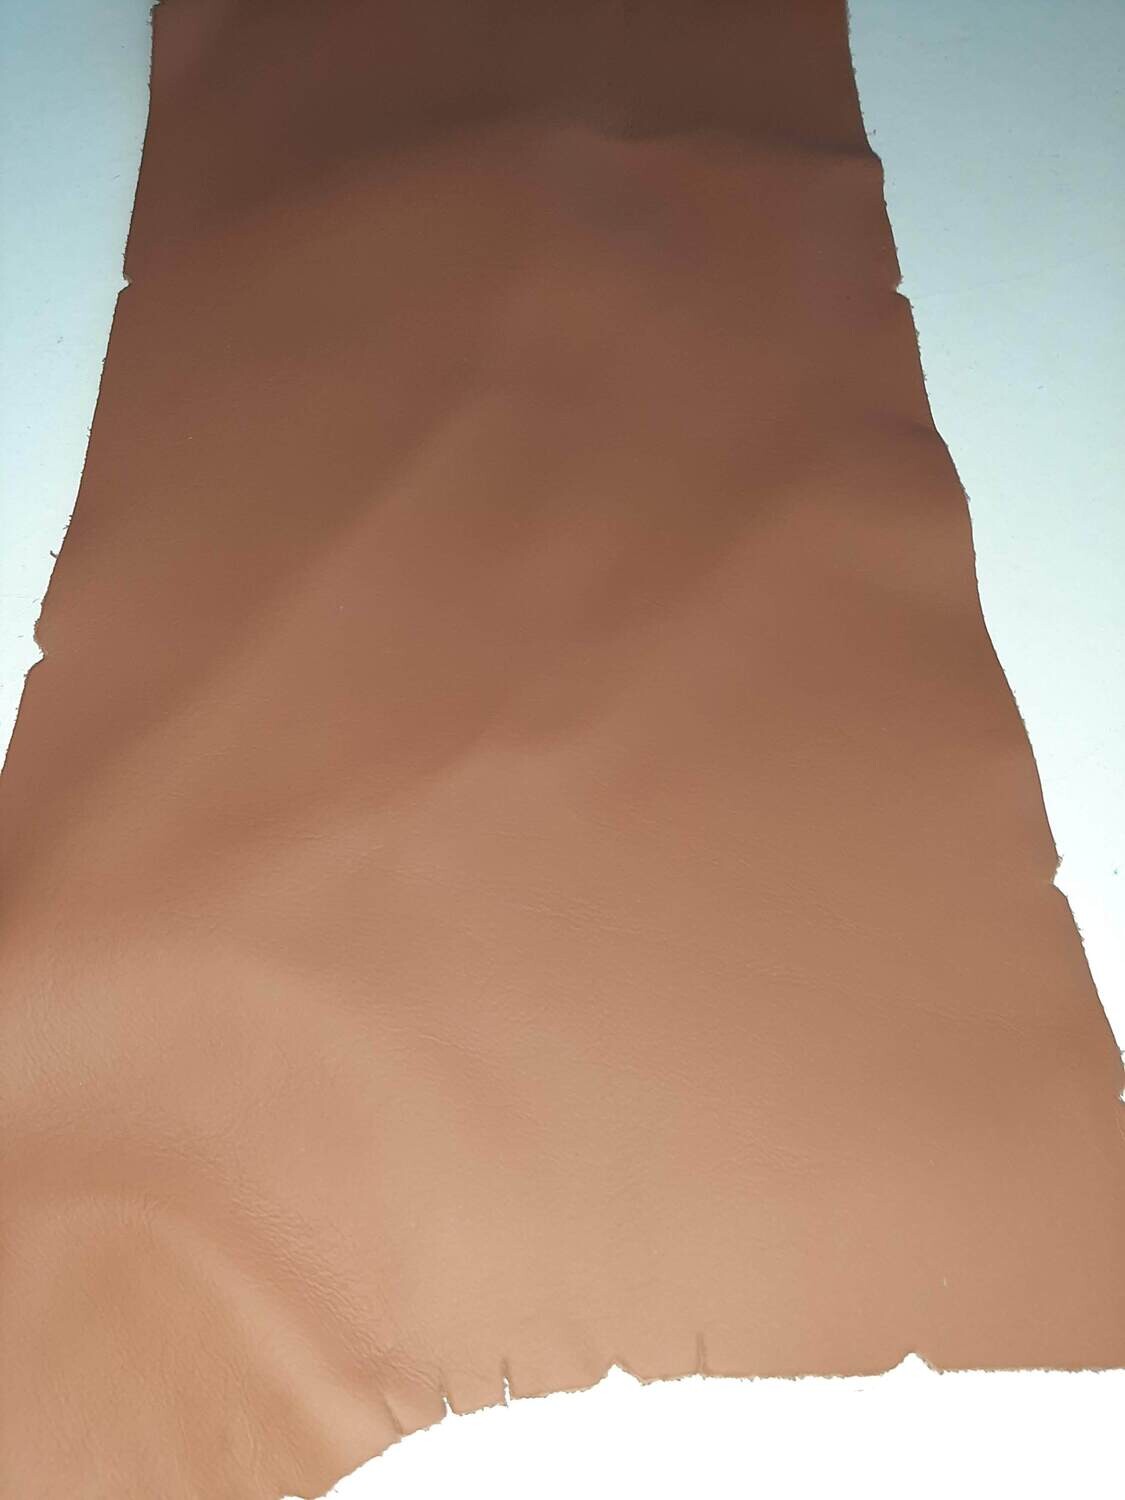 Leather piece camel color 43 x 17 cm